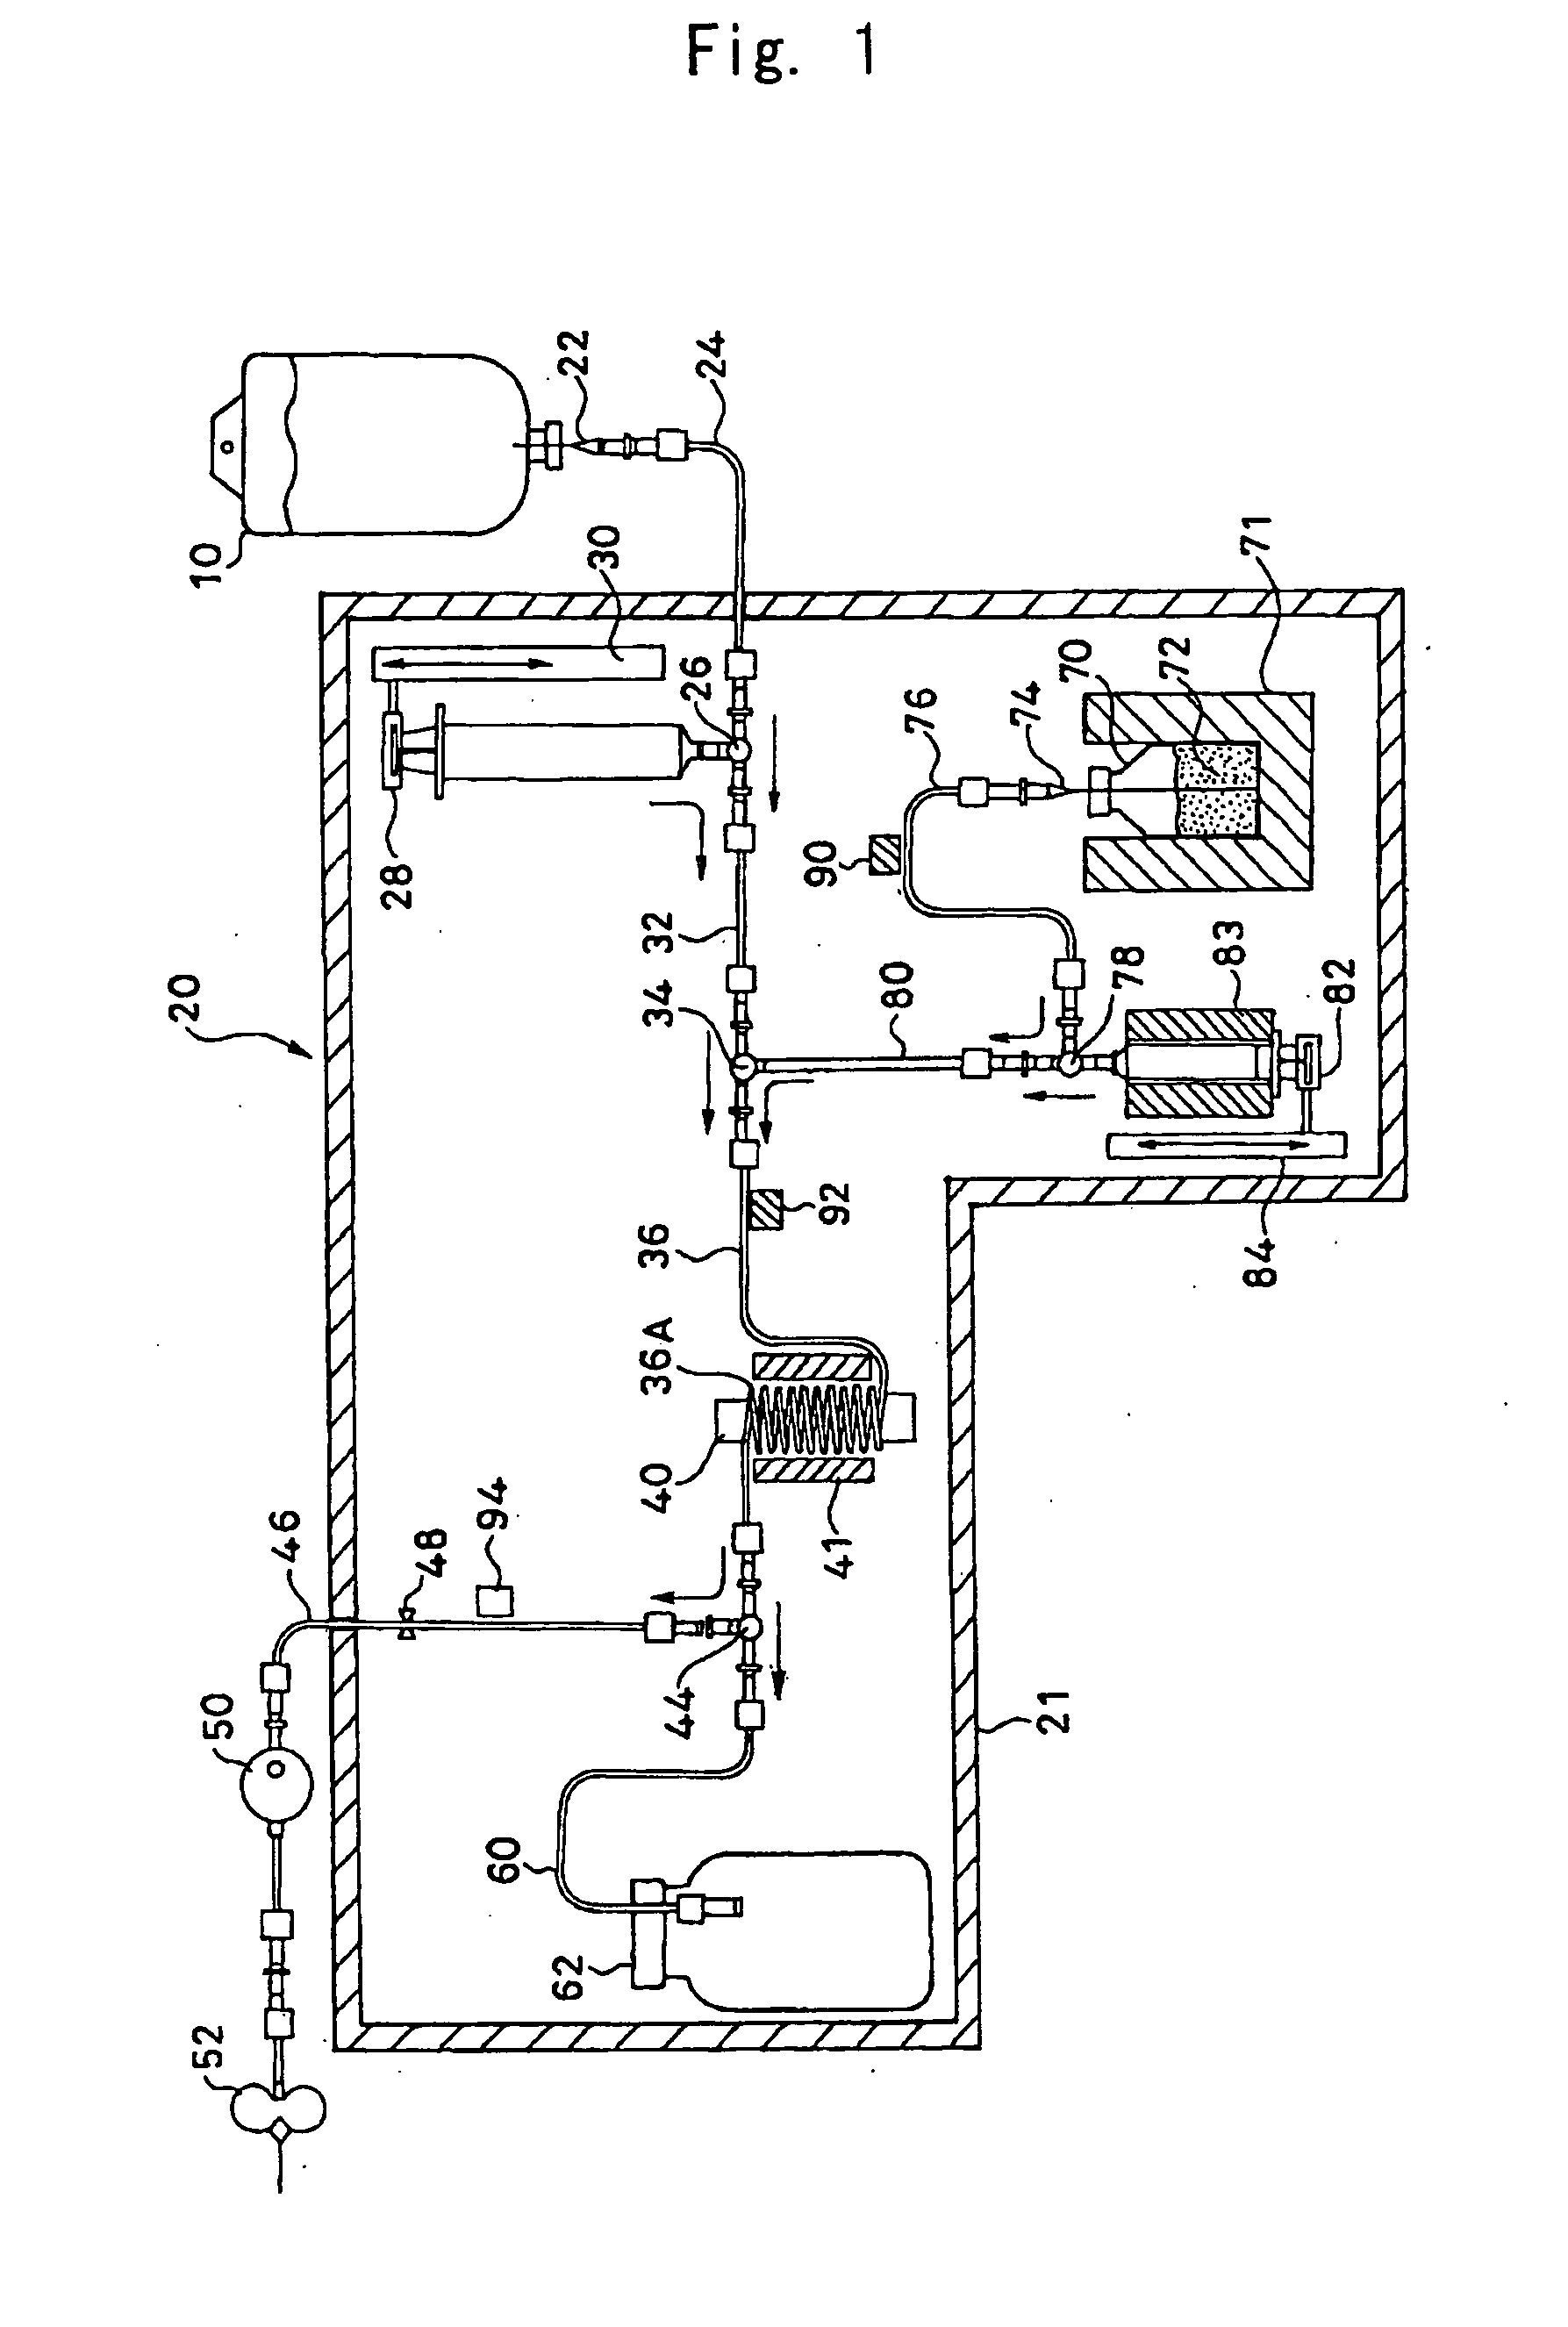 Method and apparatus for dispensing radioactive liquid